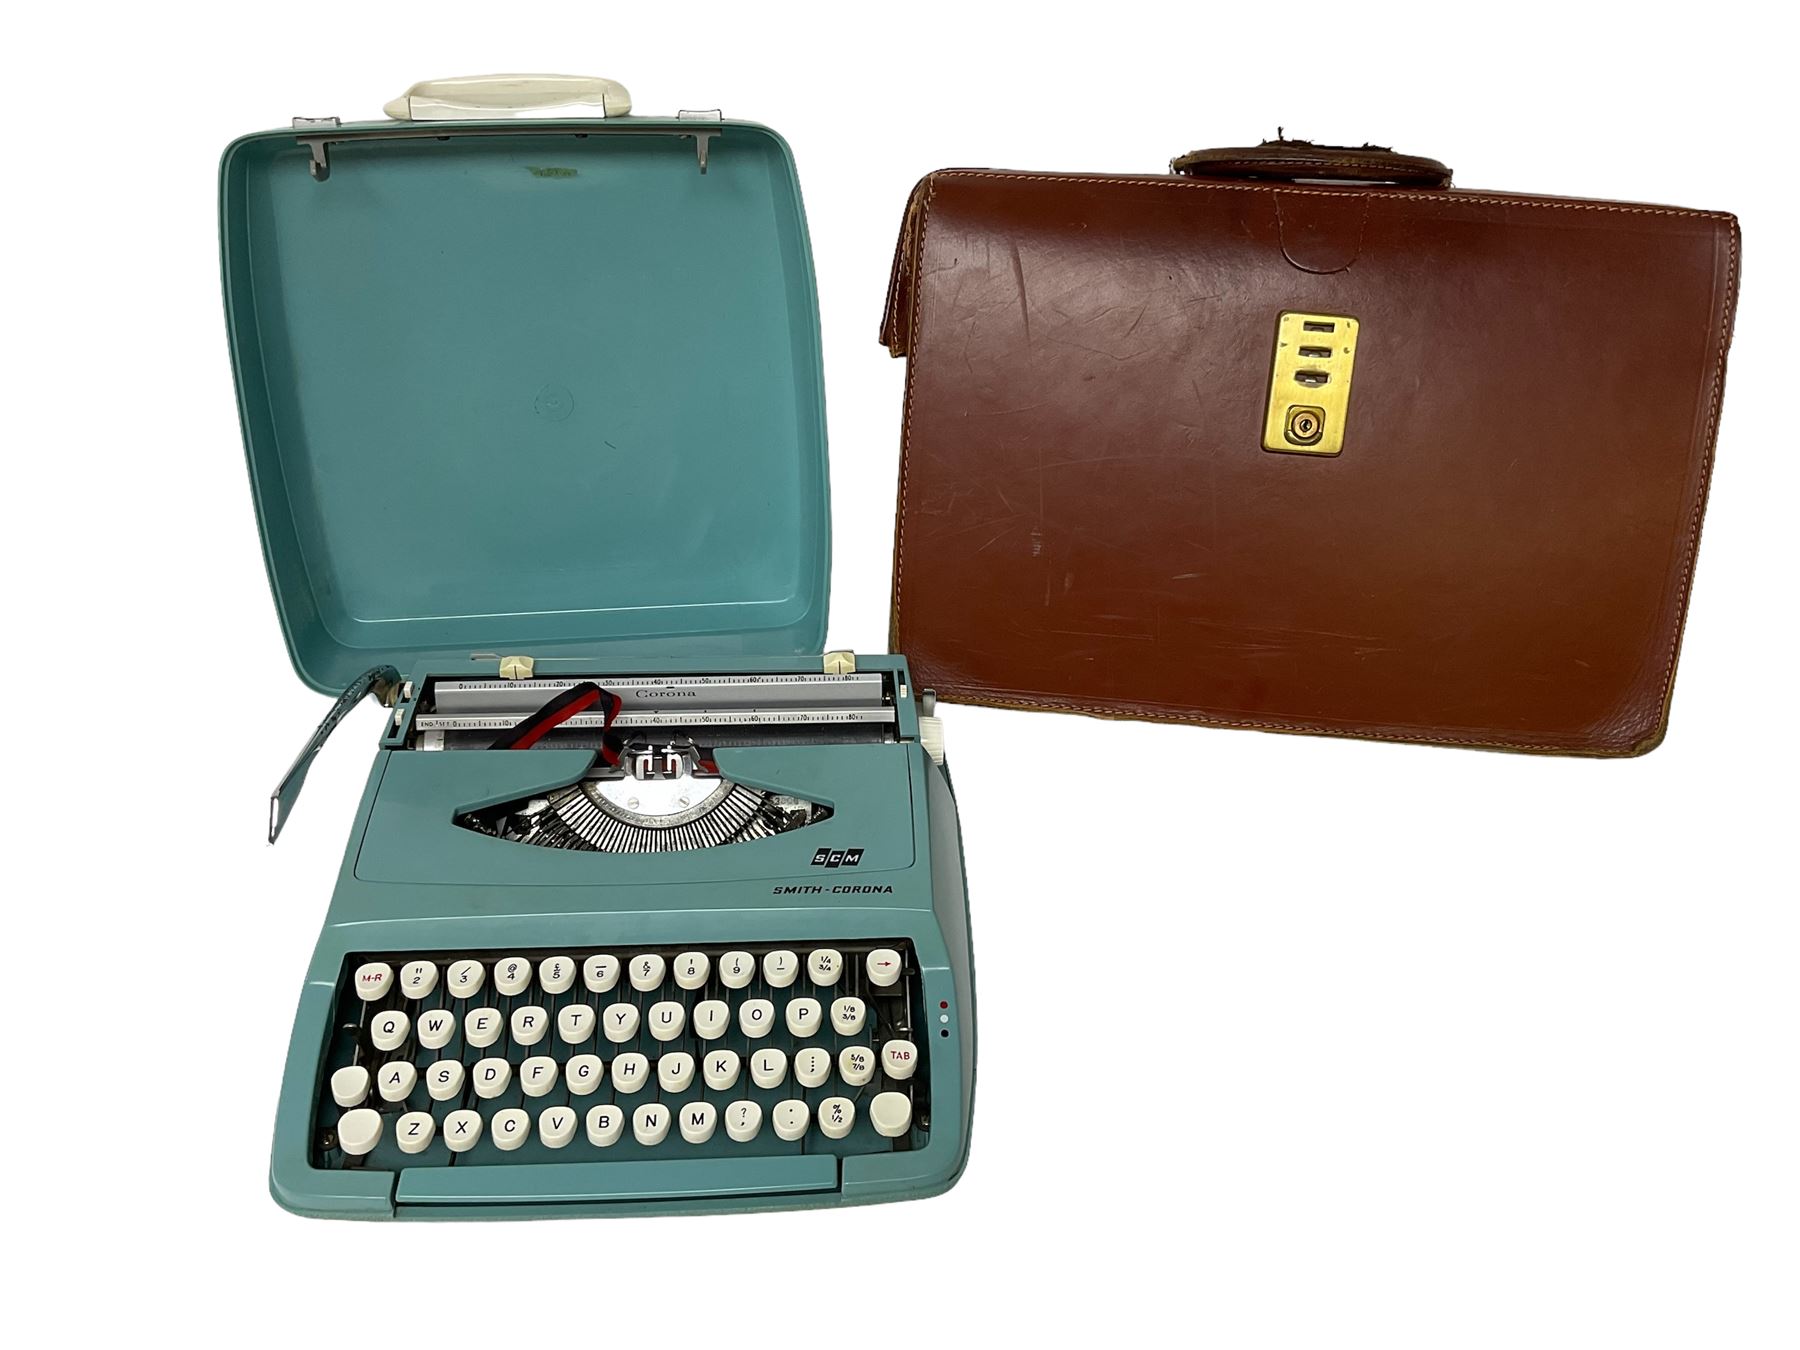 Blue Smith-Corona typewriter and leather bag